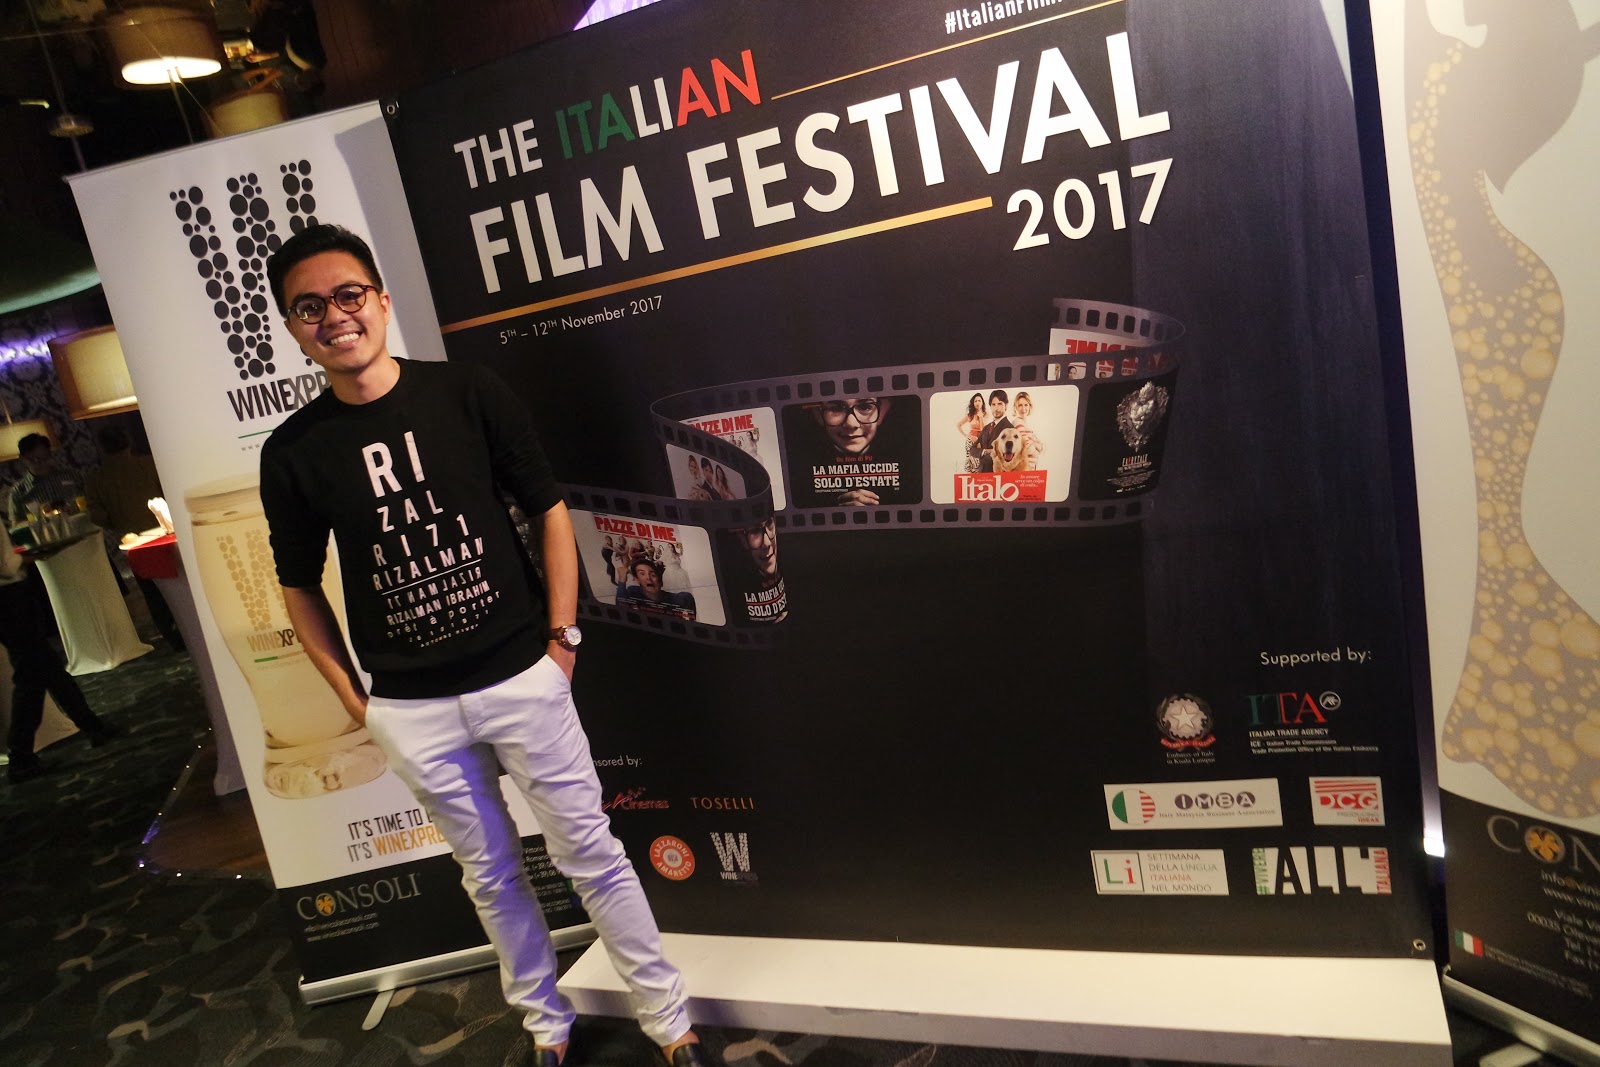 ITALIAN FILM FESTIVAL 2017